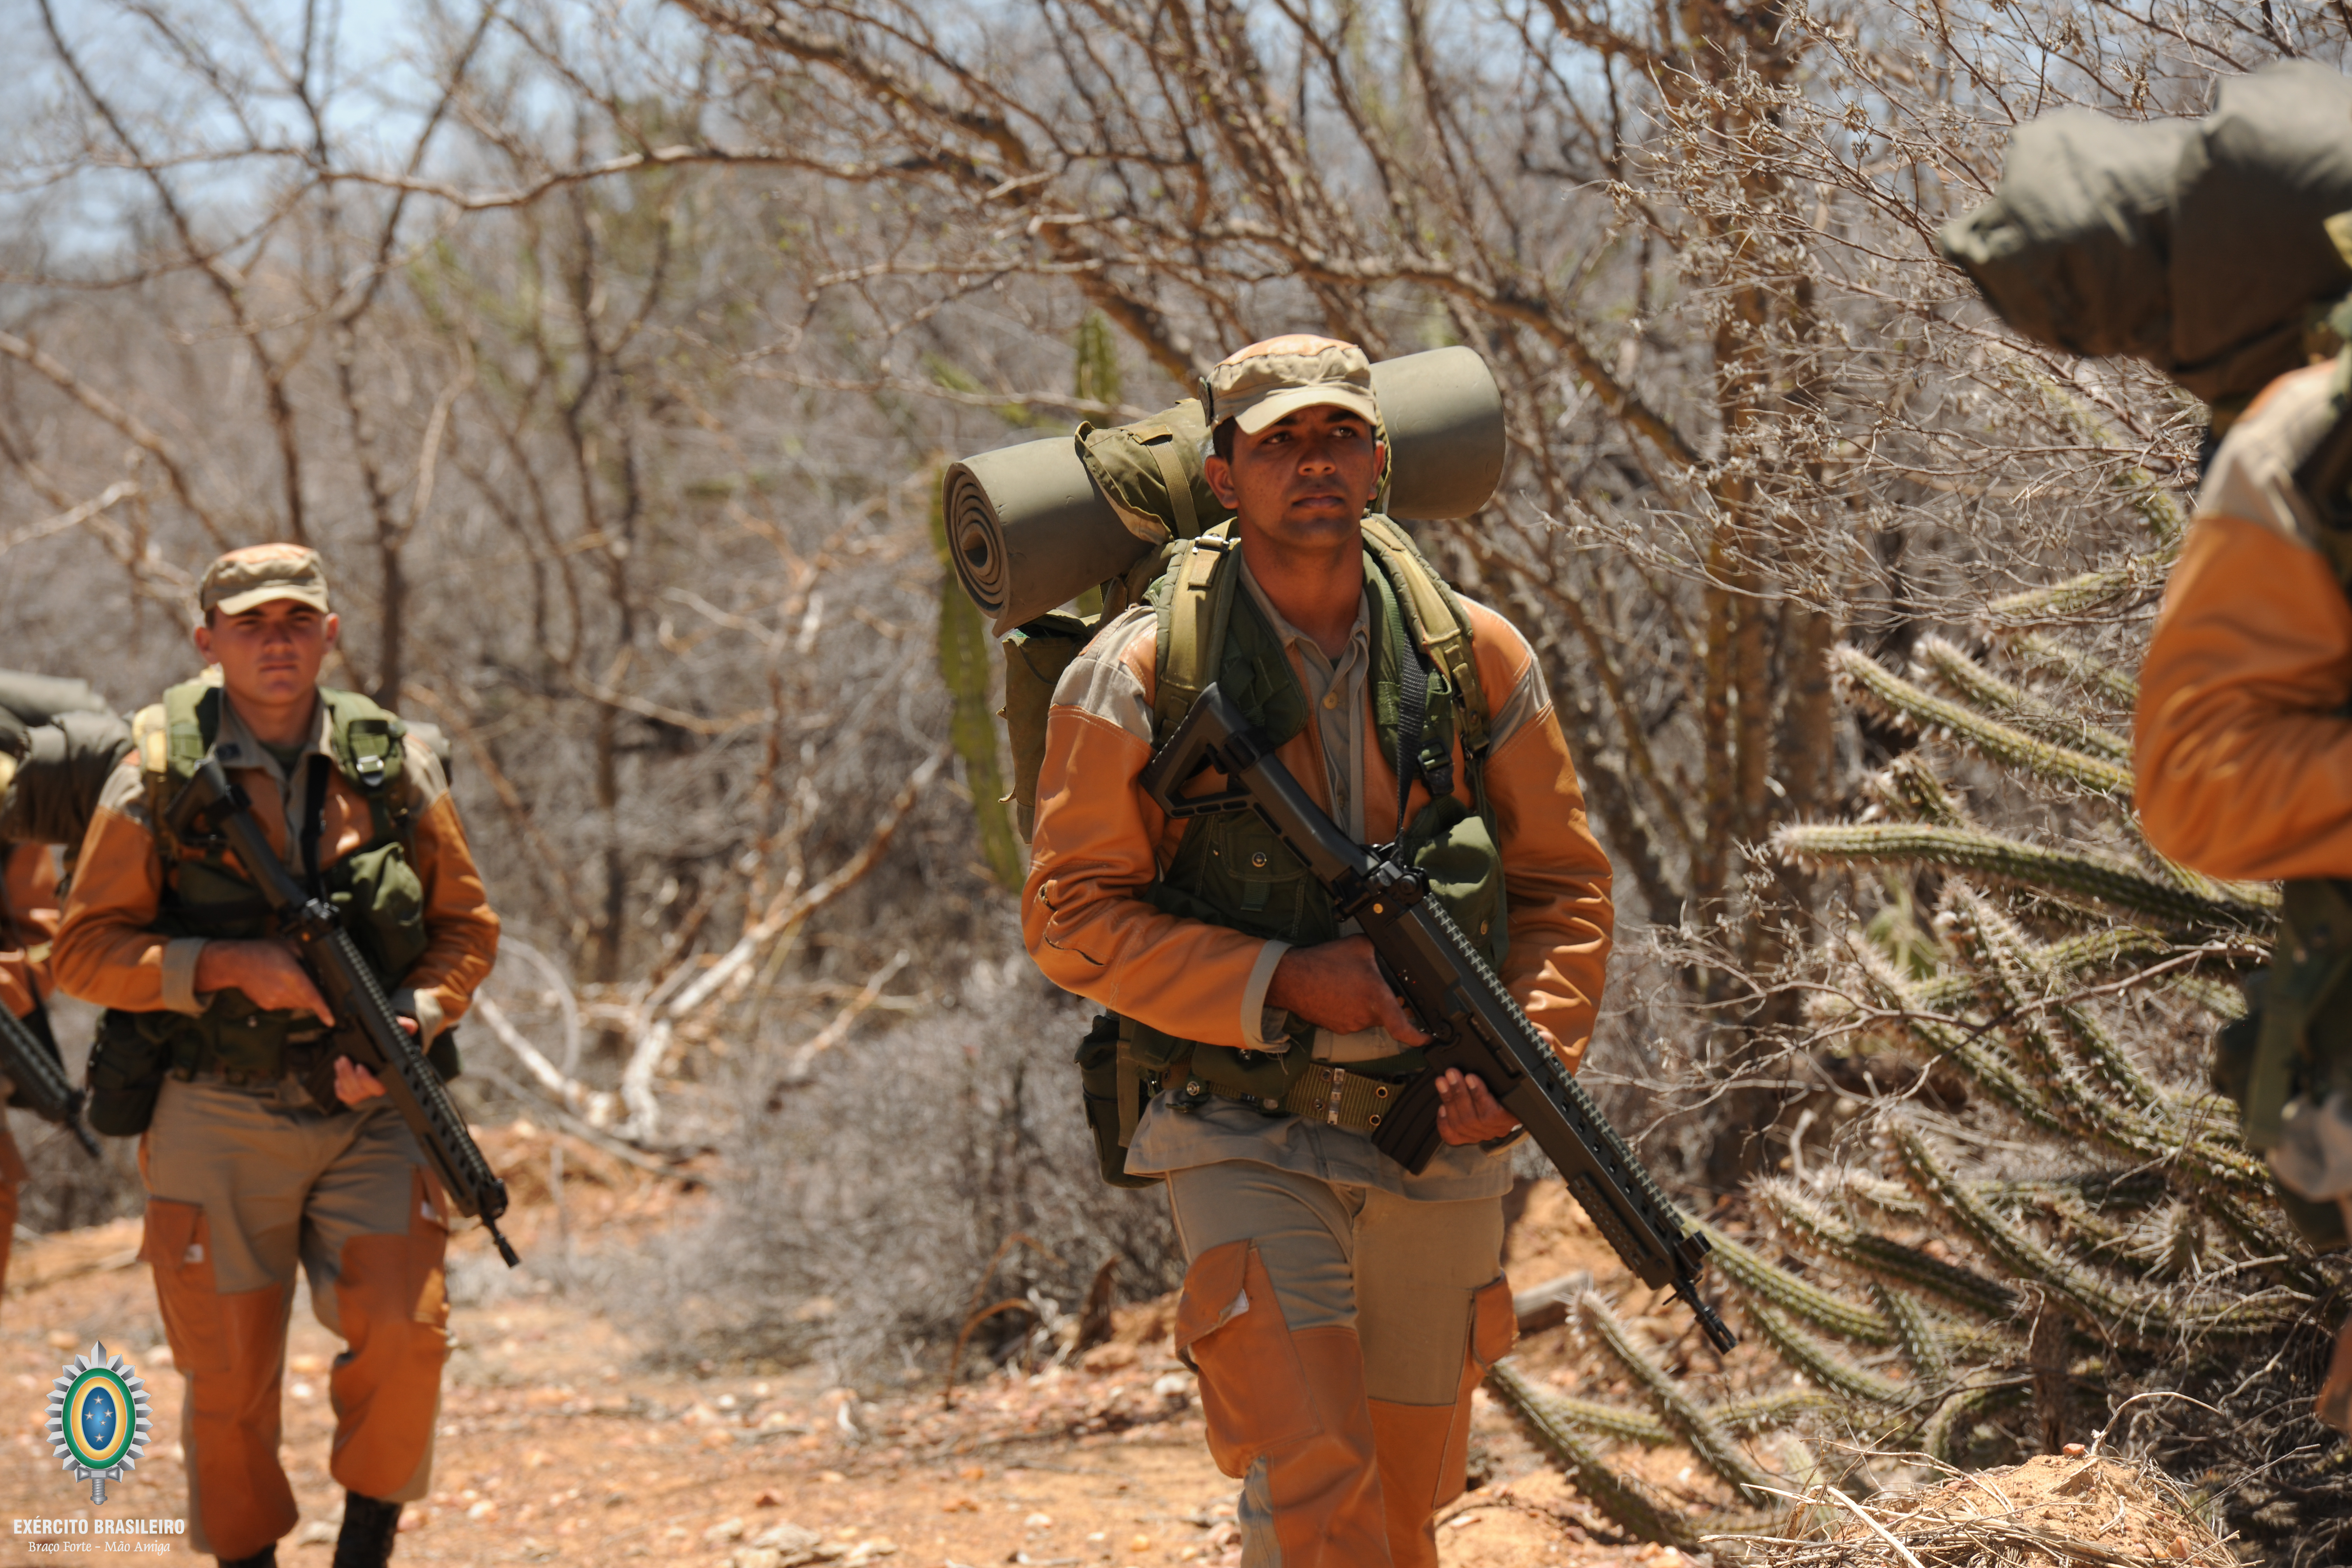 File:Combatente da Caatinga (26700198395).jpg - Wikipedia